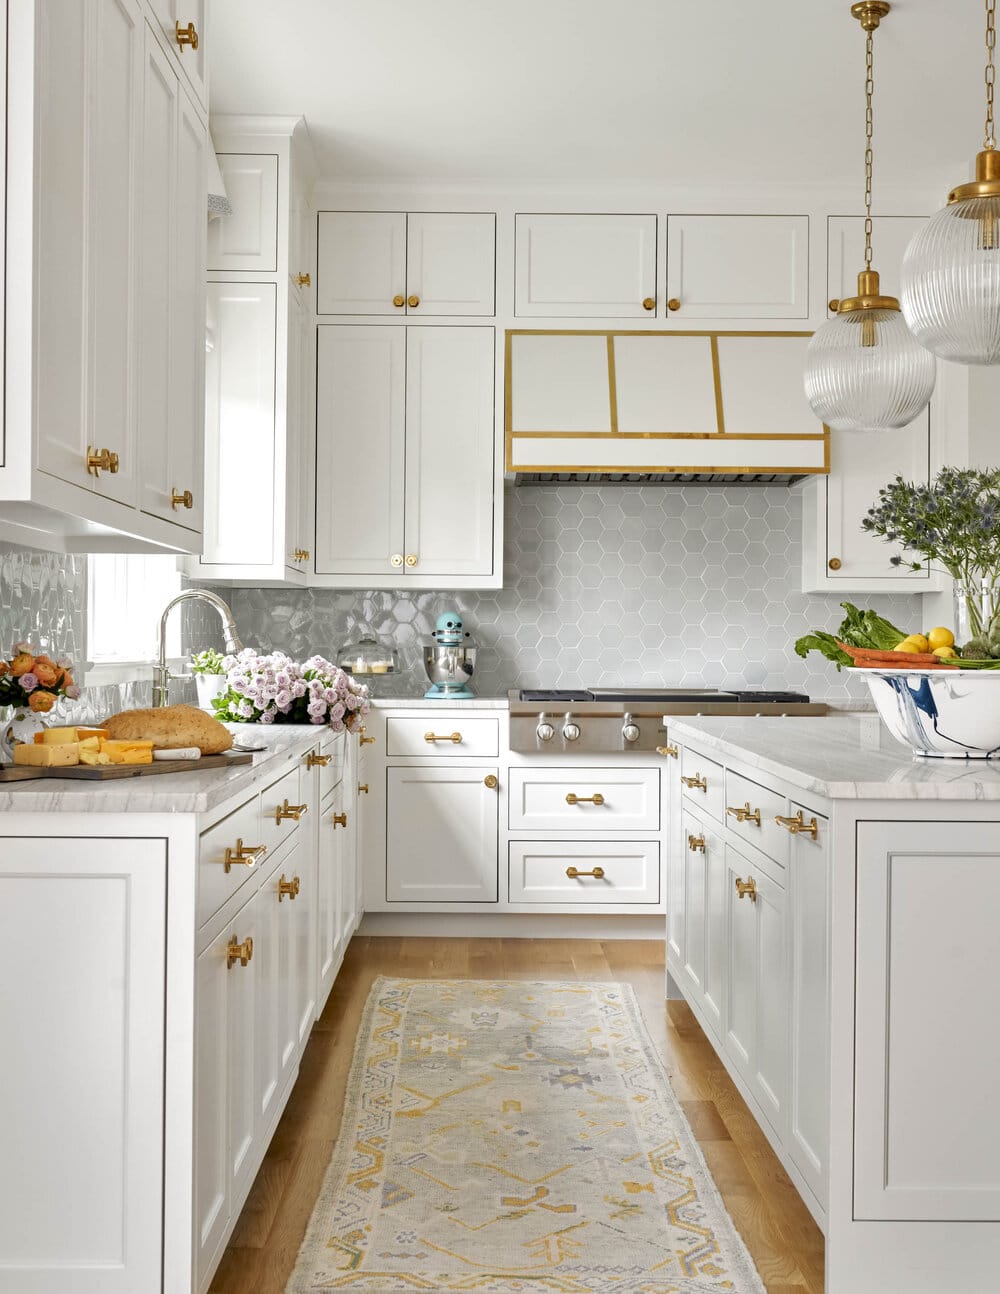 Mary Beth Wagner Interior Design - Nathan Schroder Photography - kitchen - kitchen design - kitchen remodel - kitchen design - kitchen inspo - kitchen inspiration 